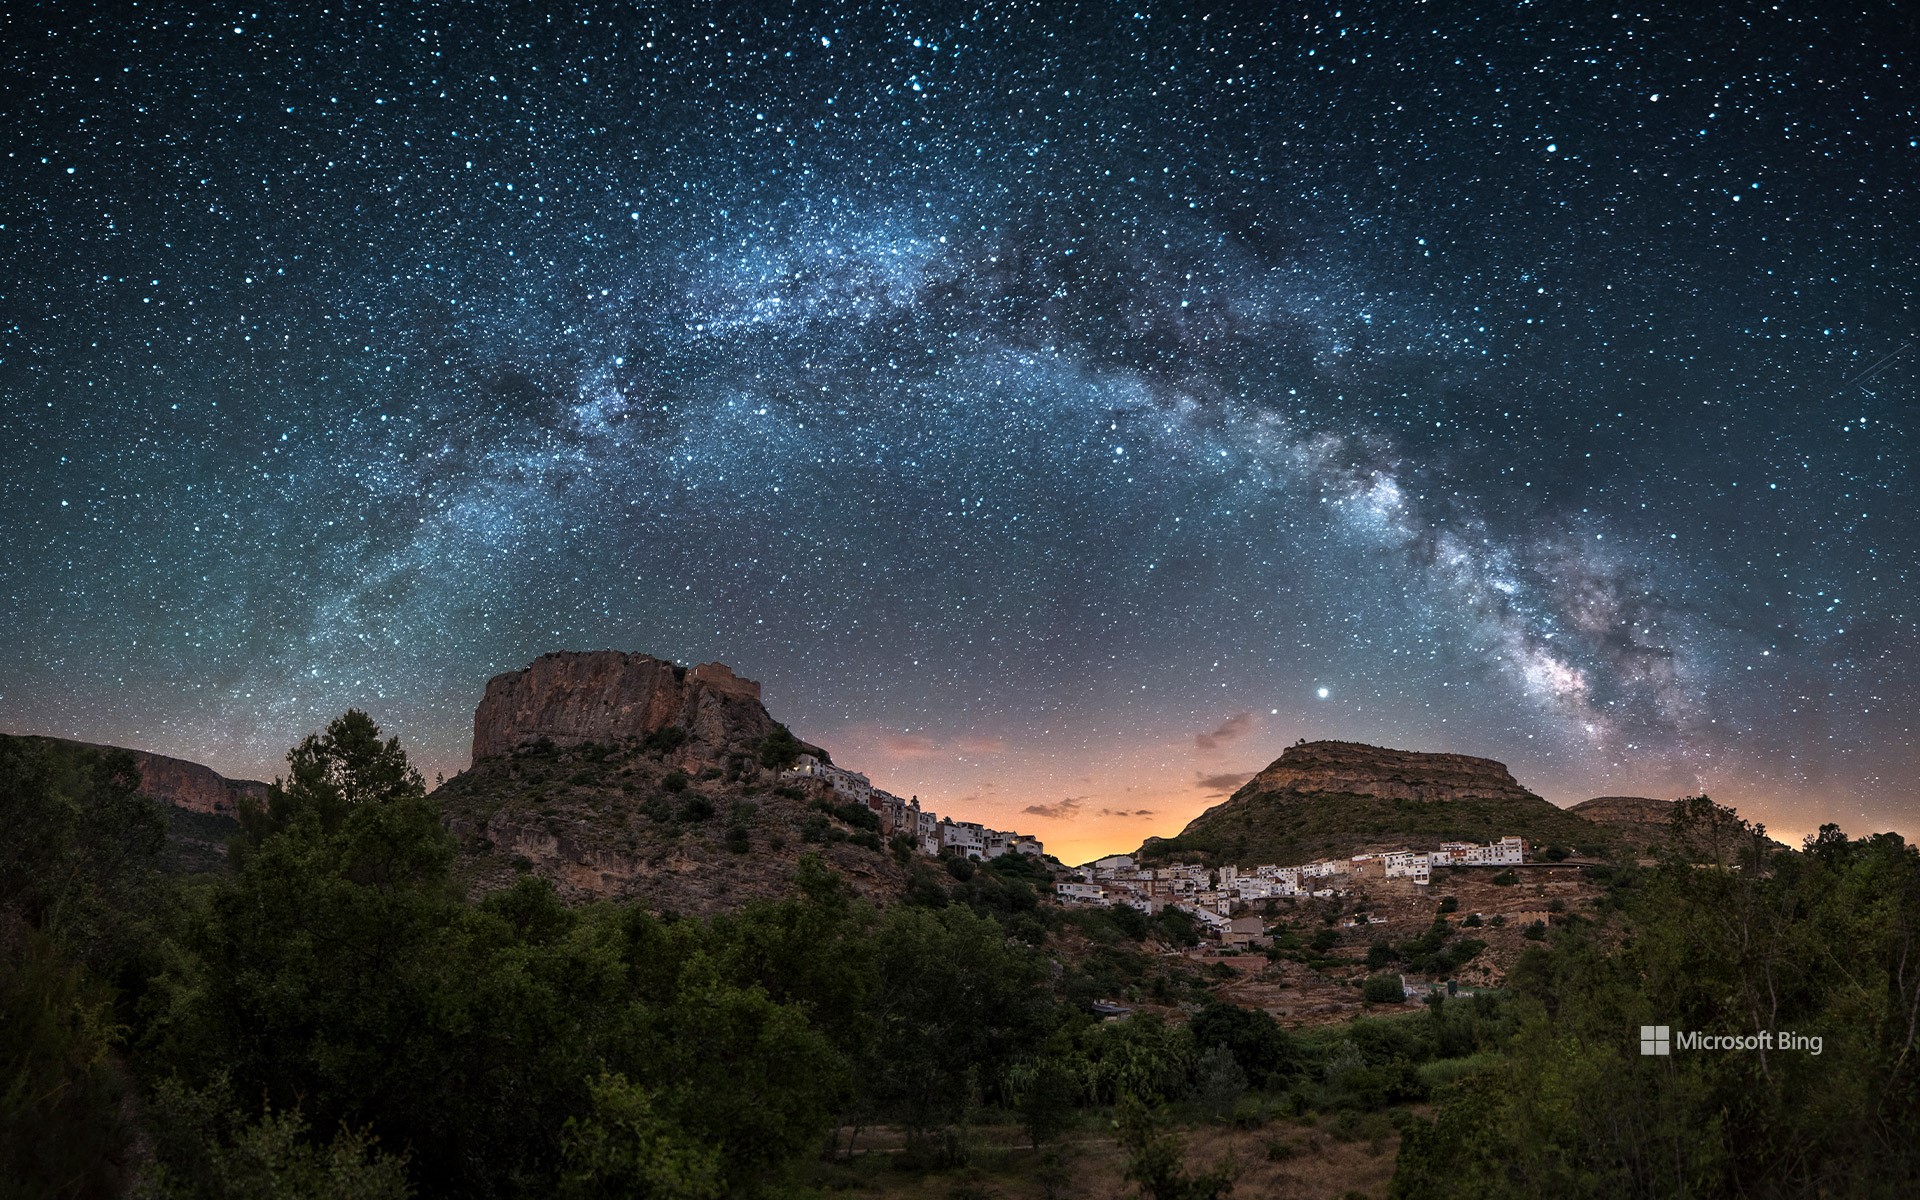 Night panorama of the Milky Way, Chulilla, Spain